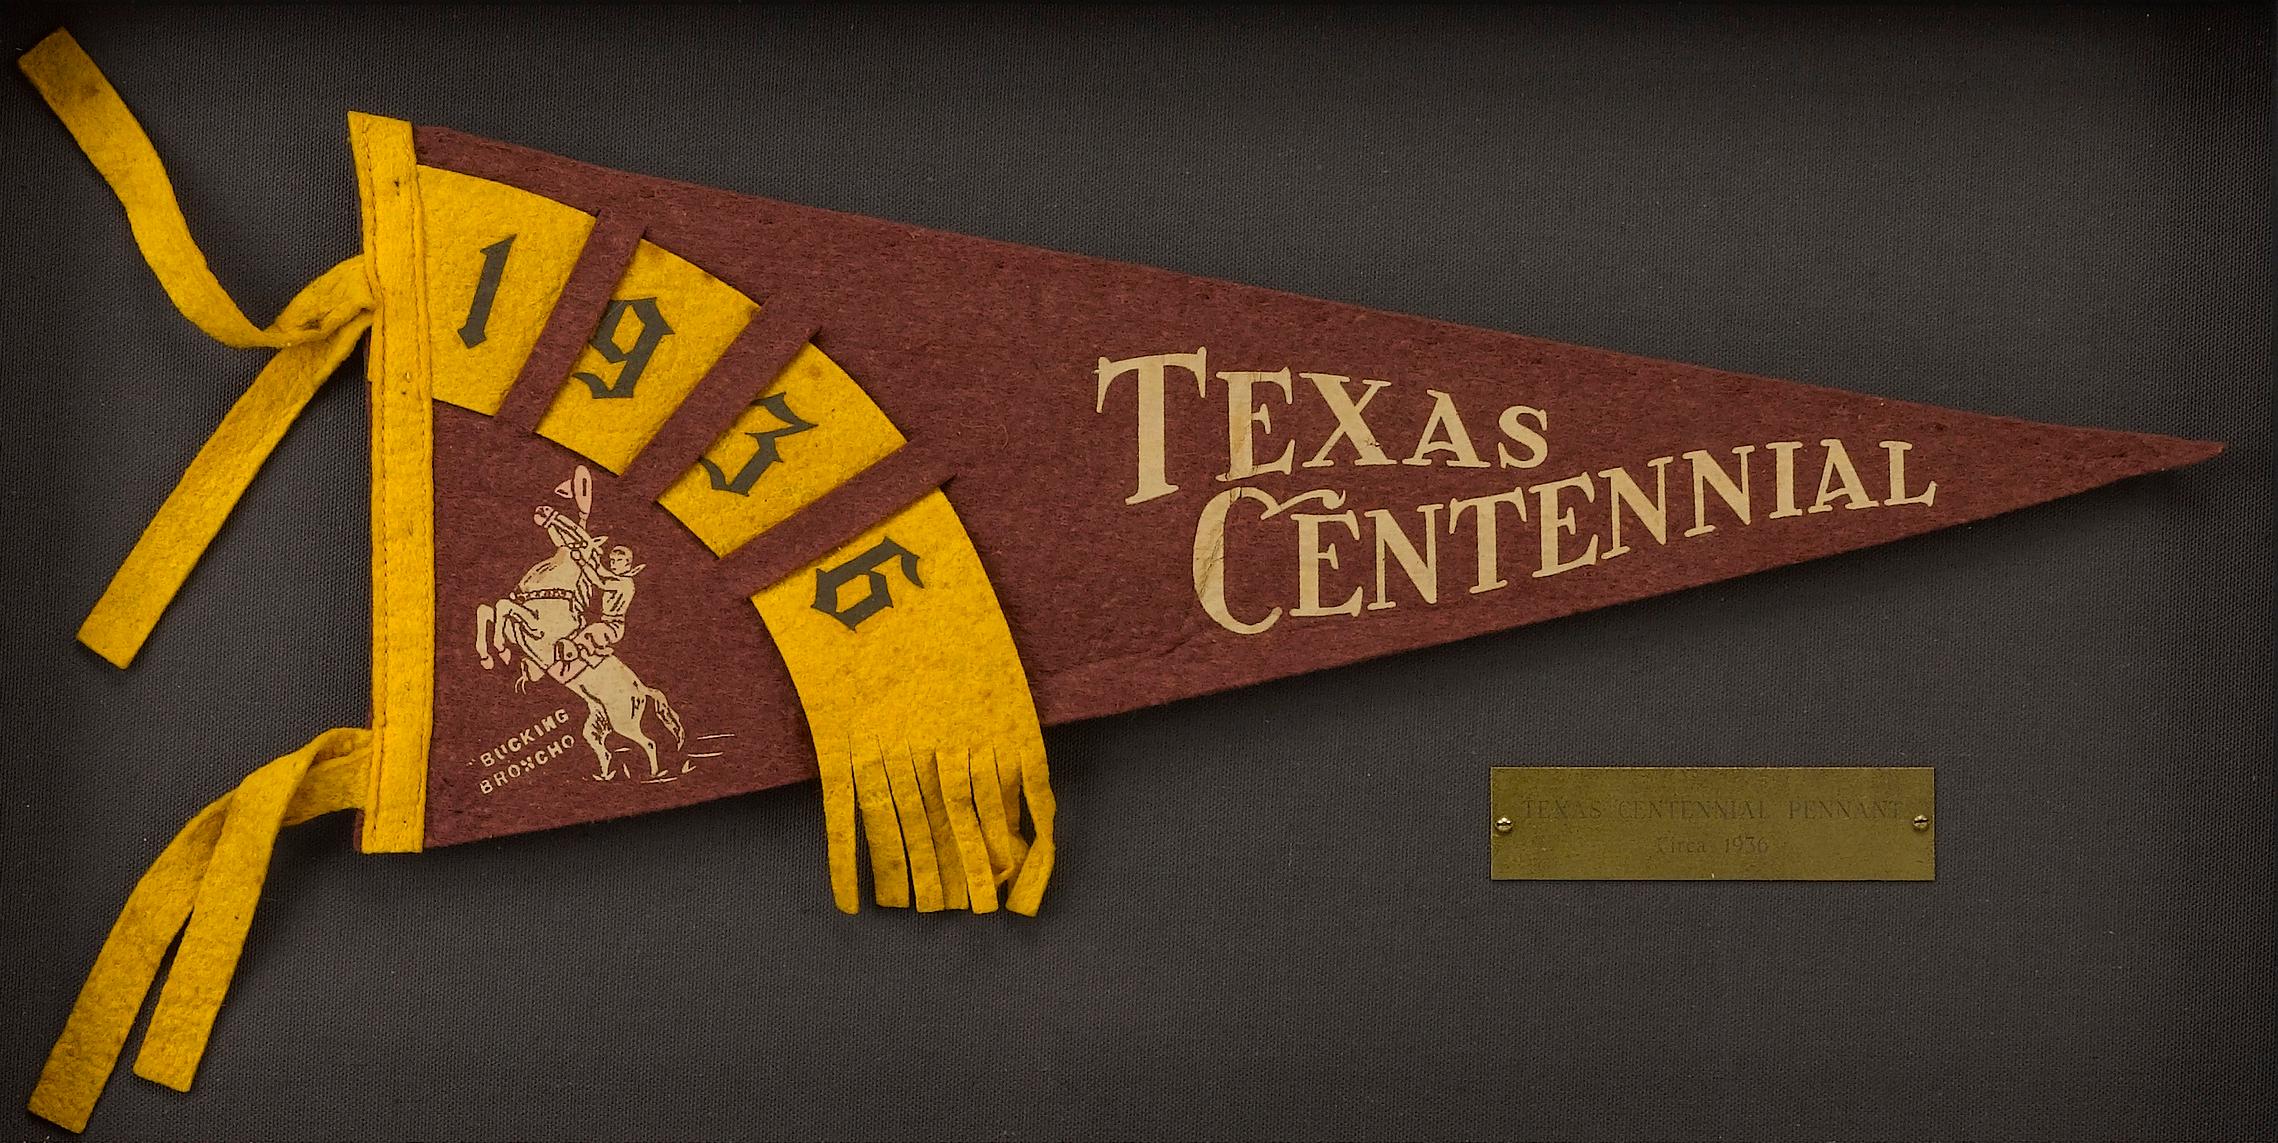 This is an original vintage Texas Centennial Pennant, from 1936. The felt pennant has a rich burgundy field, white script that reads 